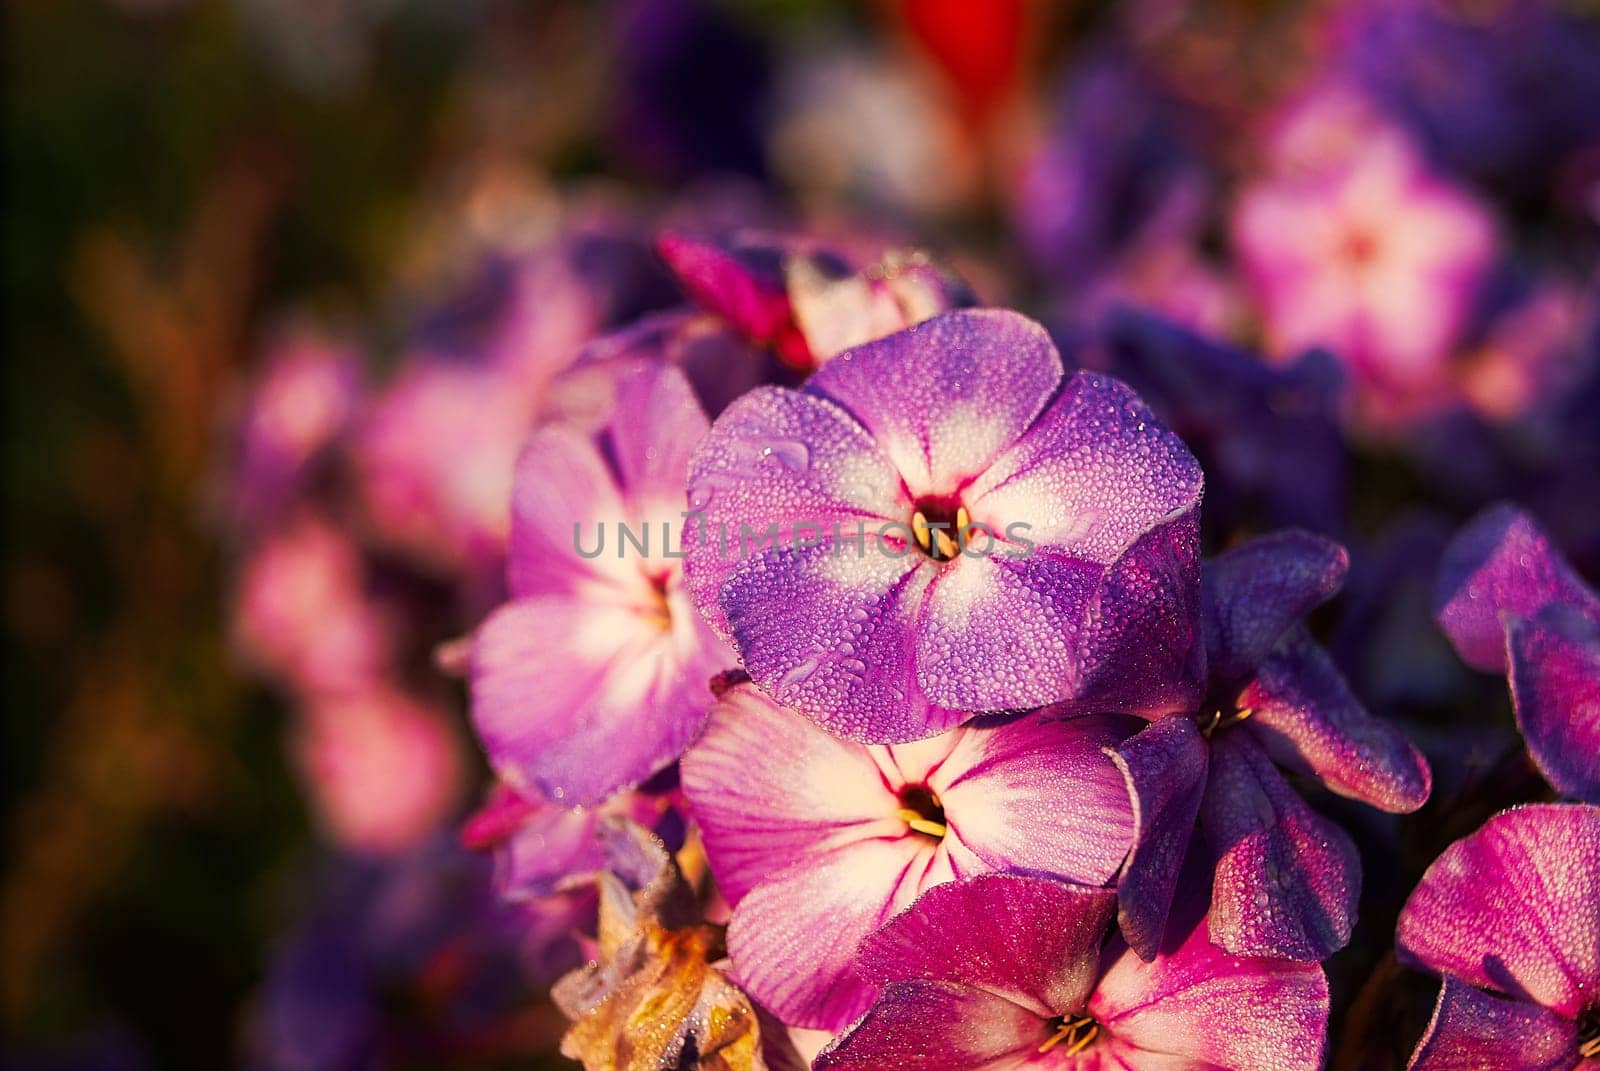 red lilac lilac phlox with dew drops on blurred background by Севостьянов